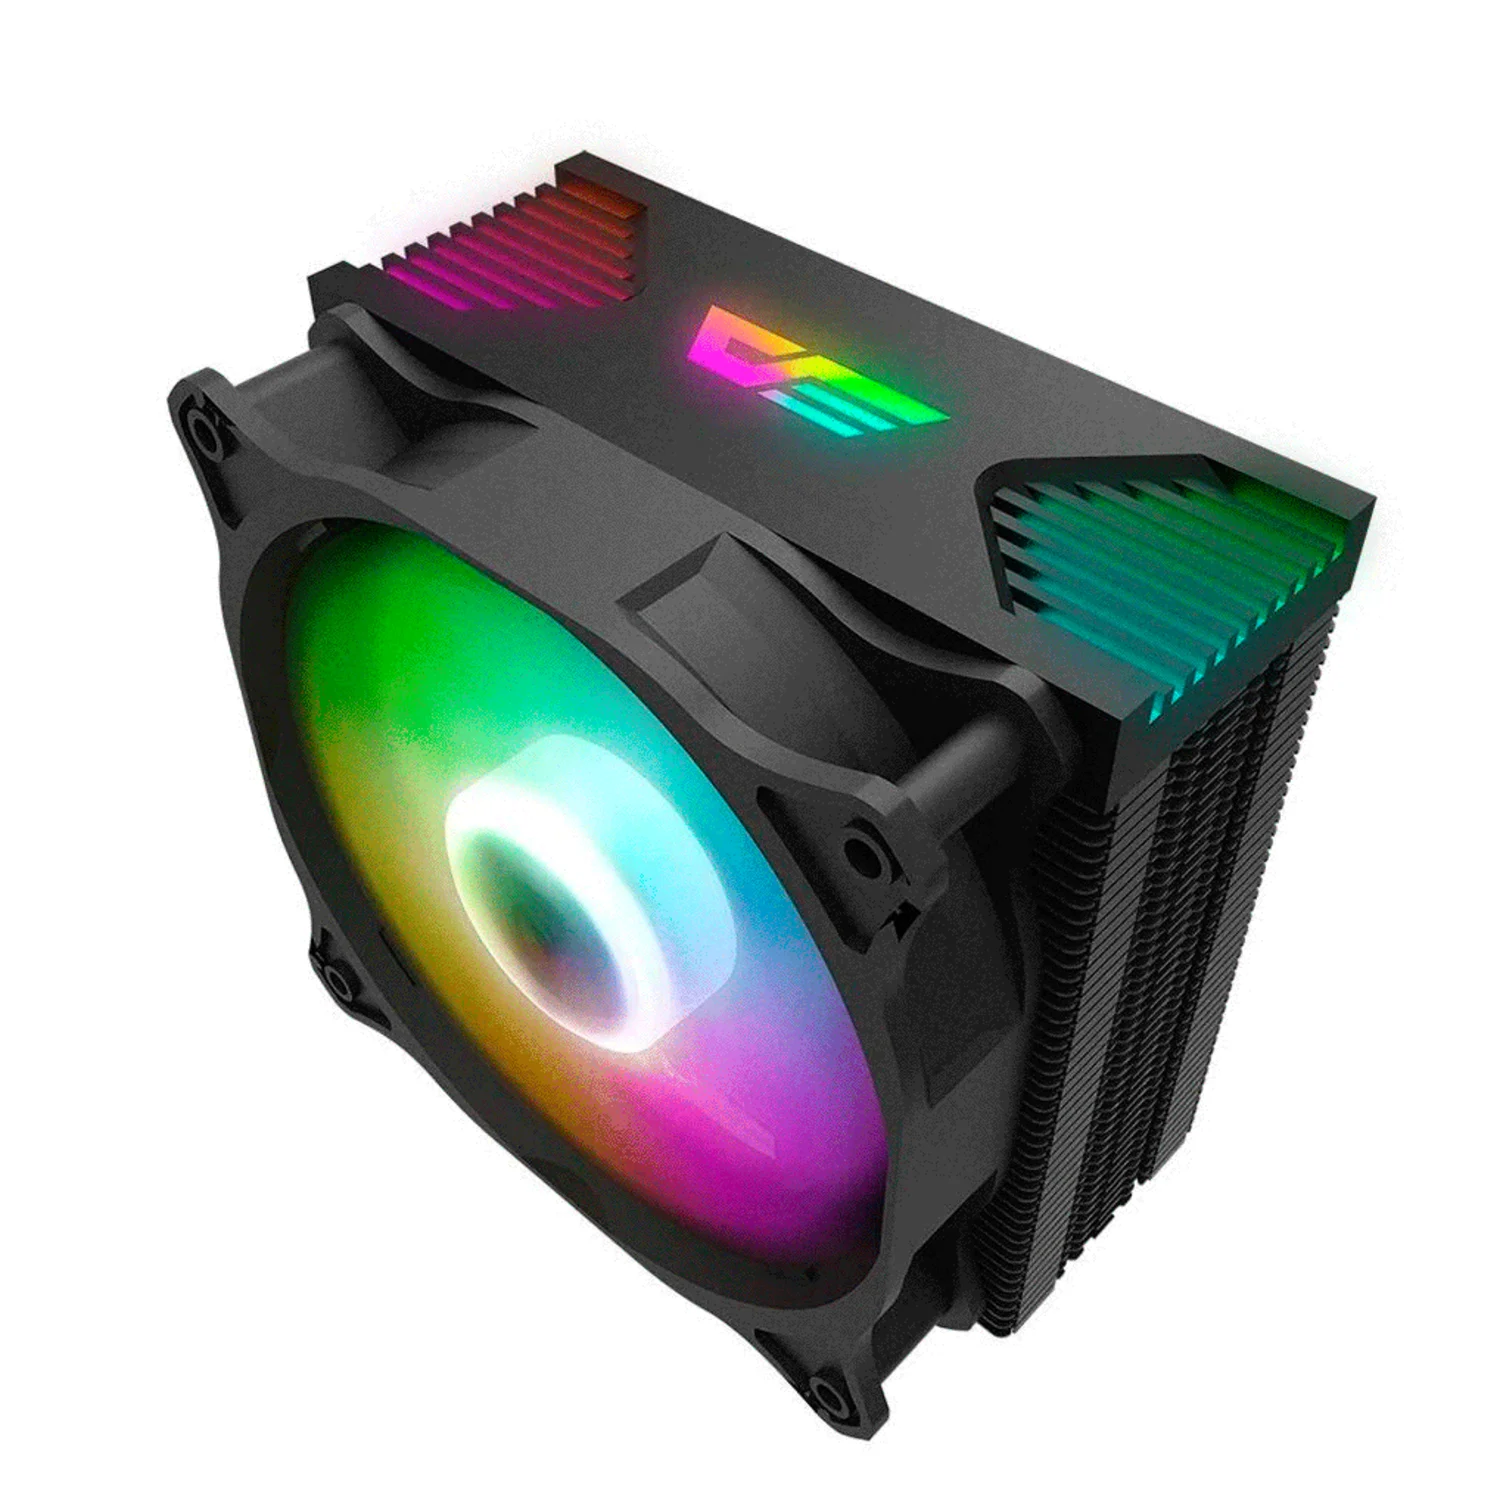 Cooler para Processador Darkflash Dark Air Rainbow Led